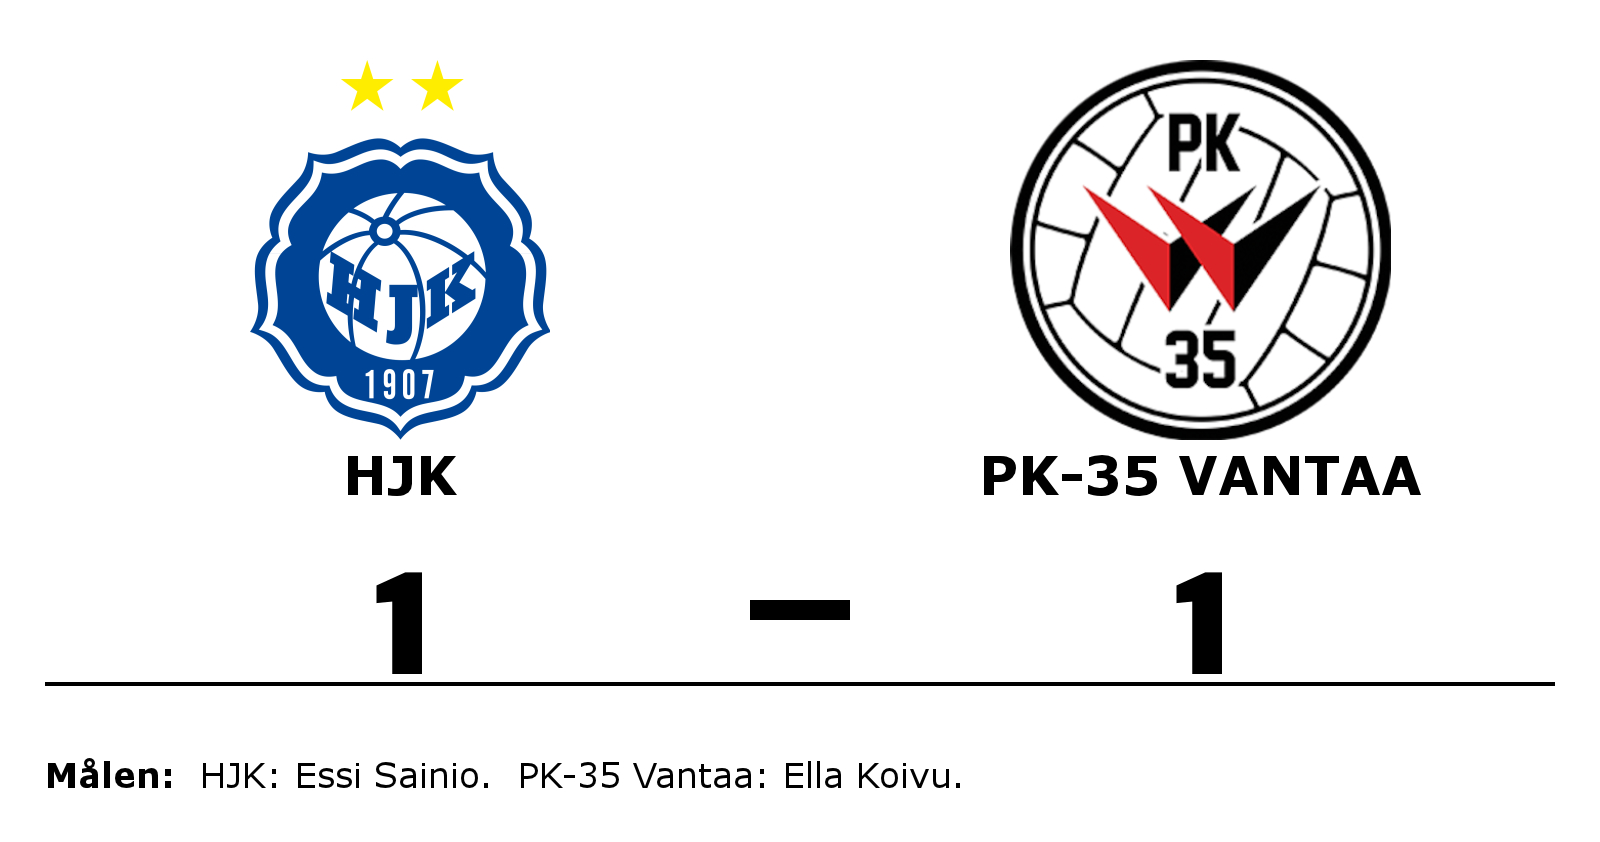 HJK spelade lika mot PK-35 Vantaa